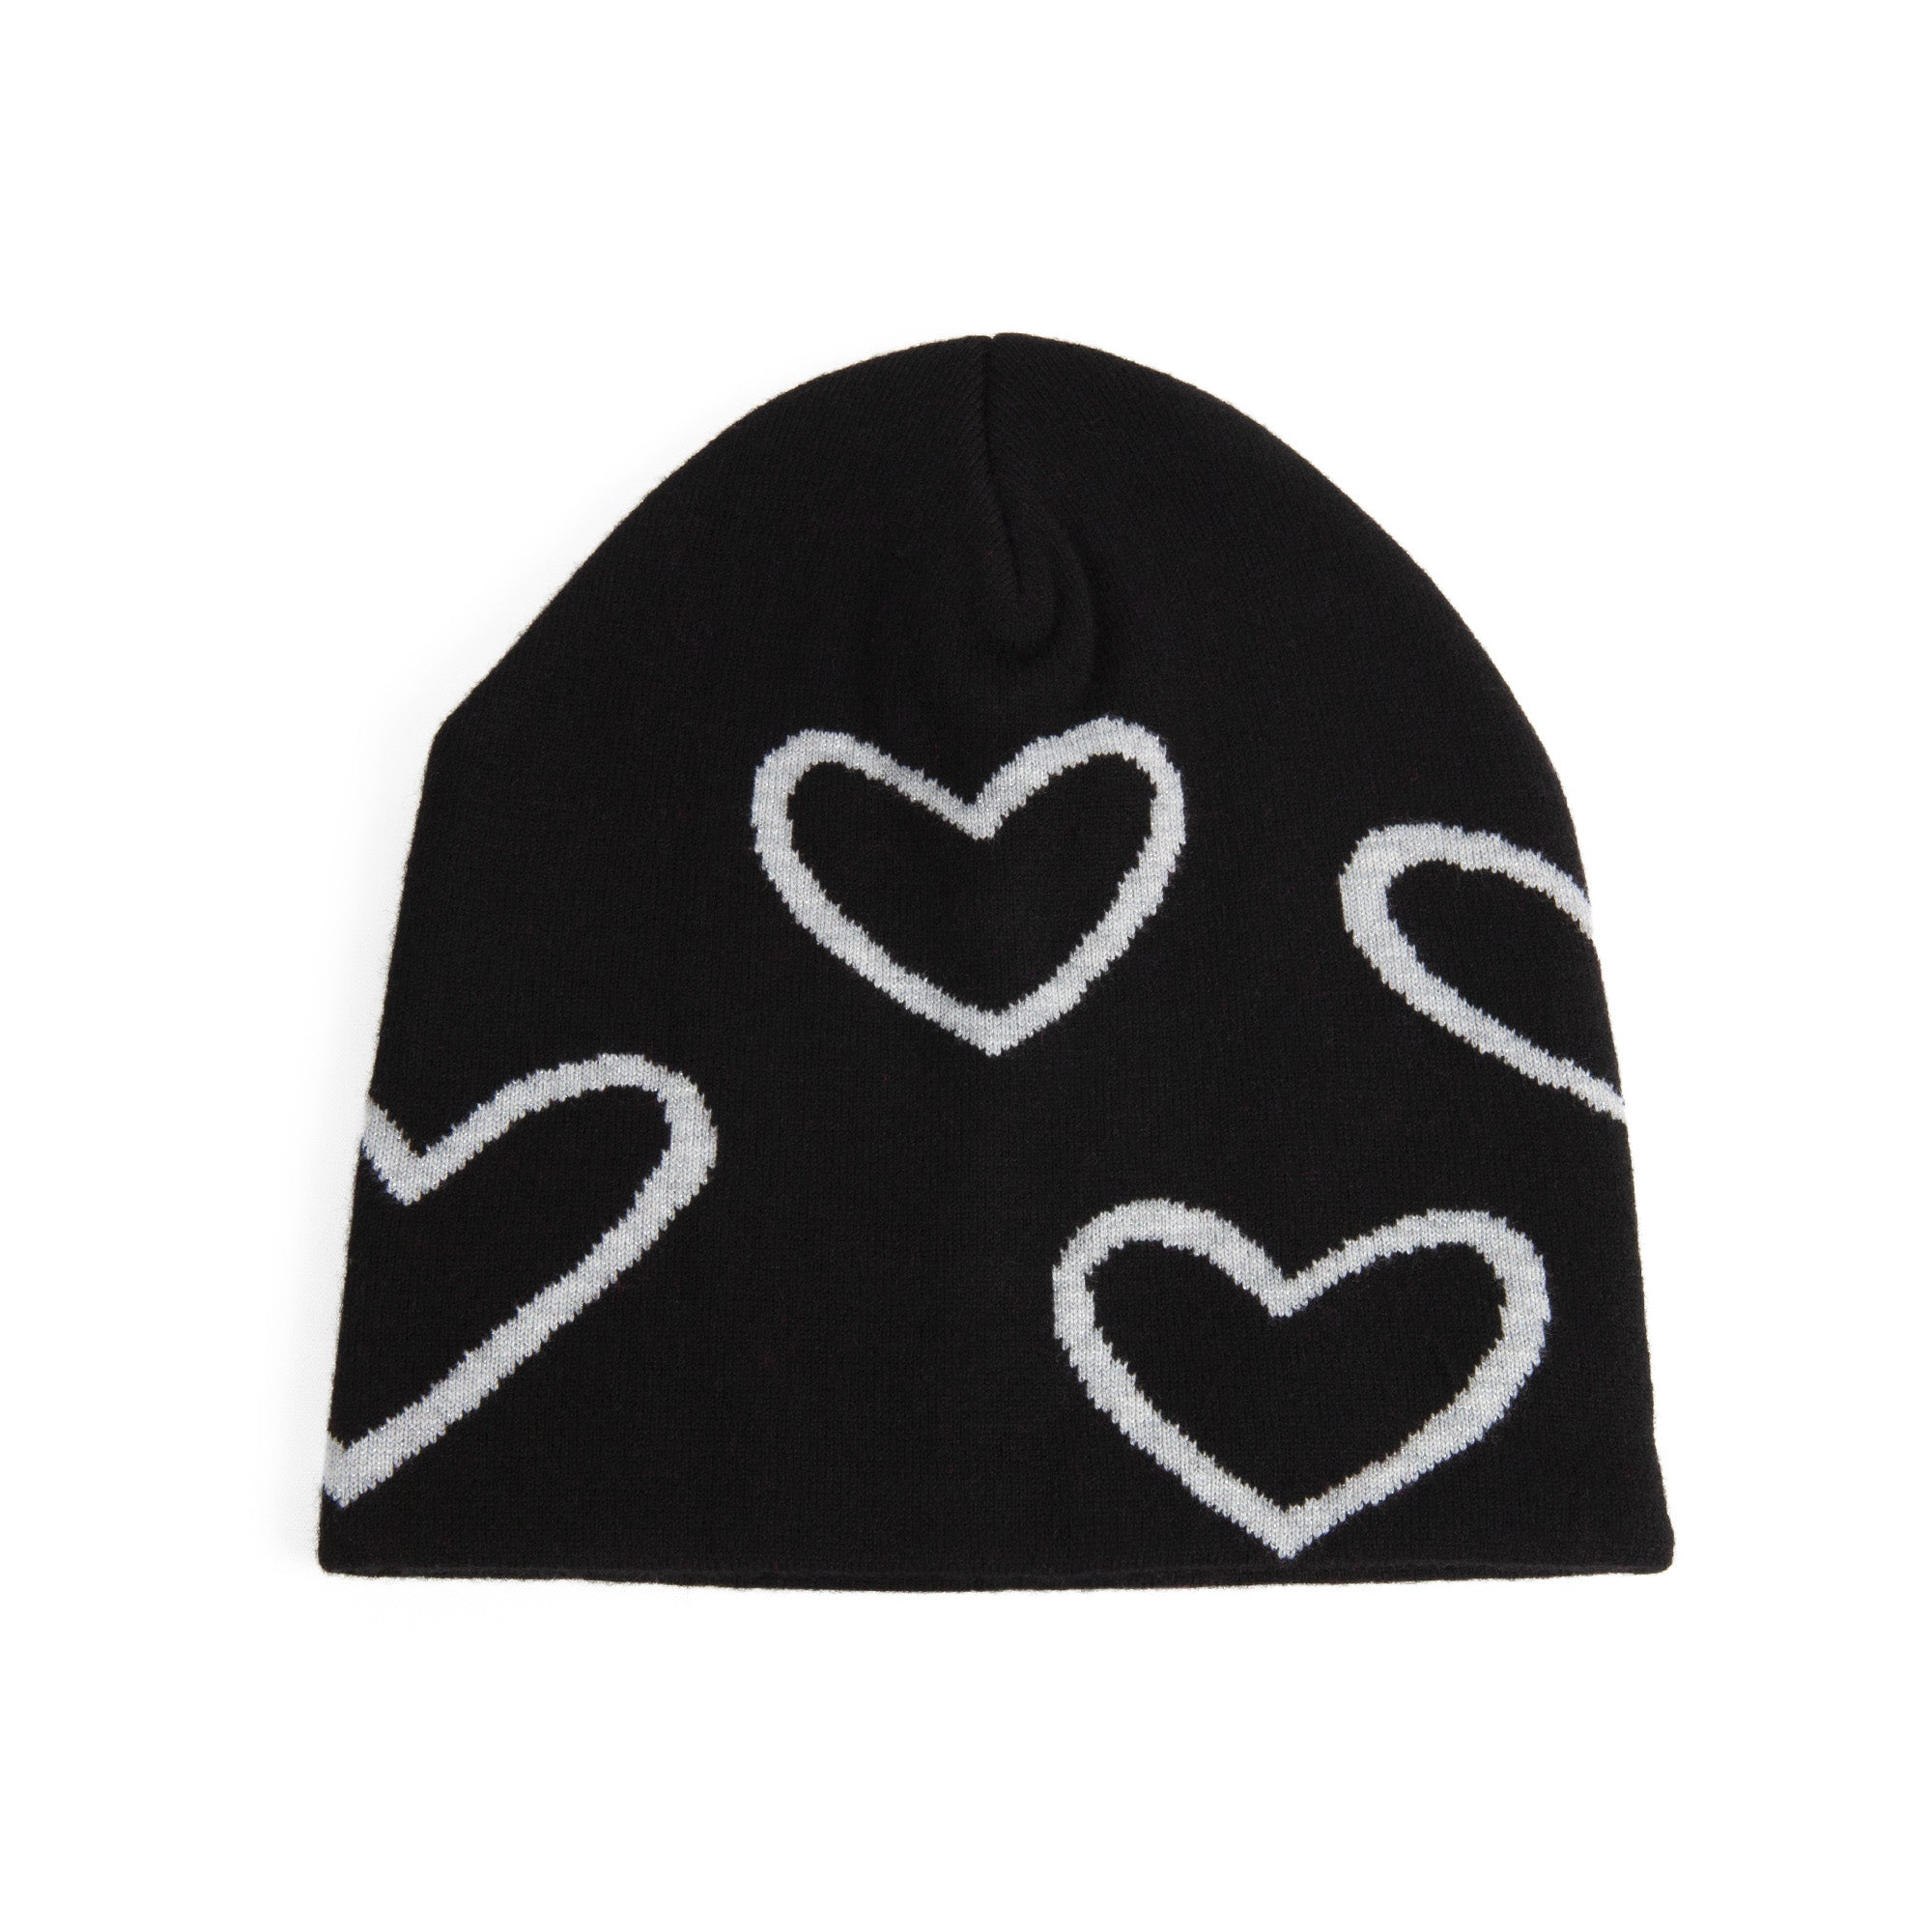 Women’s Hats, Women’s Beanie Hats, Winter Hats,  Comfortable, Heart Lady, Winter, Cold Weather